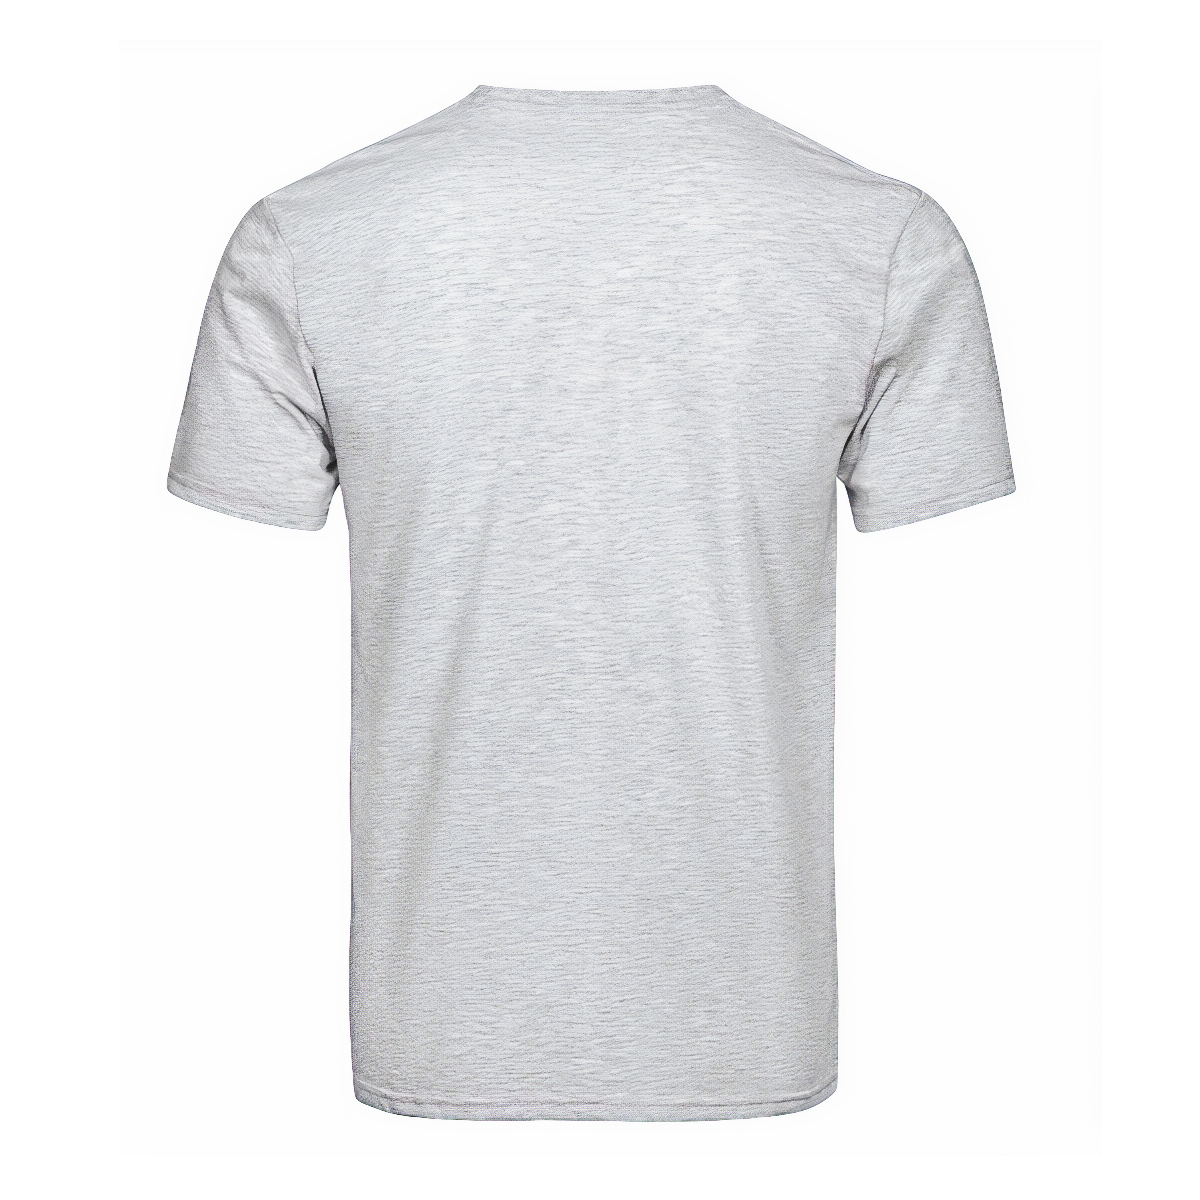 Spalding Tartan Crest T-shirt - I'm not yelling style